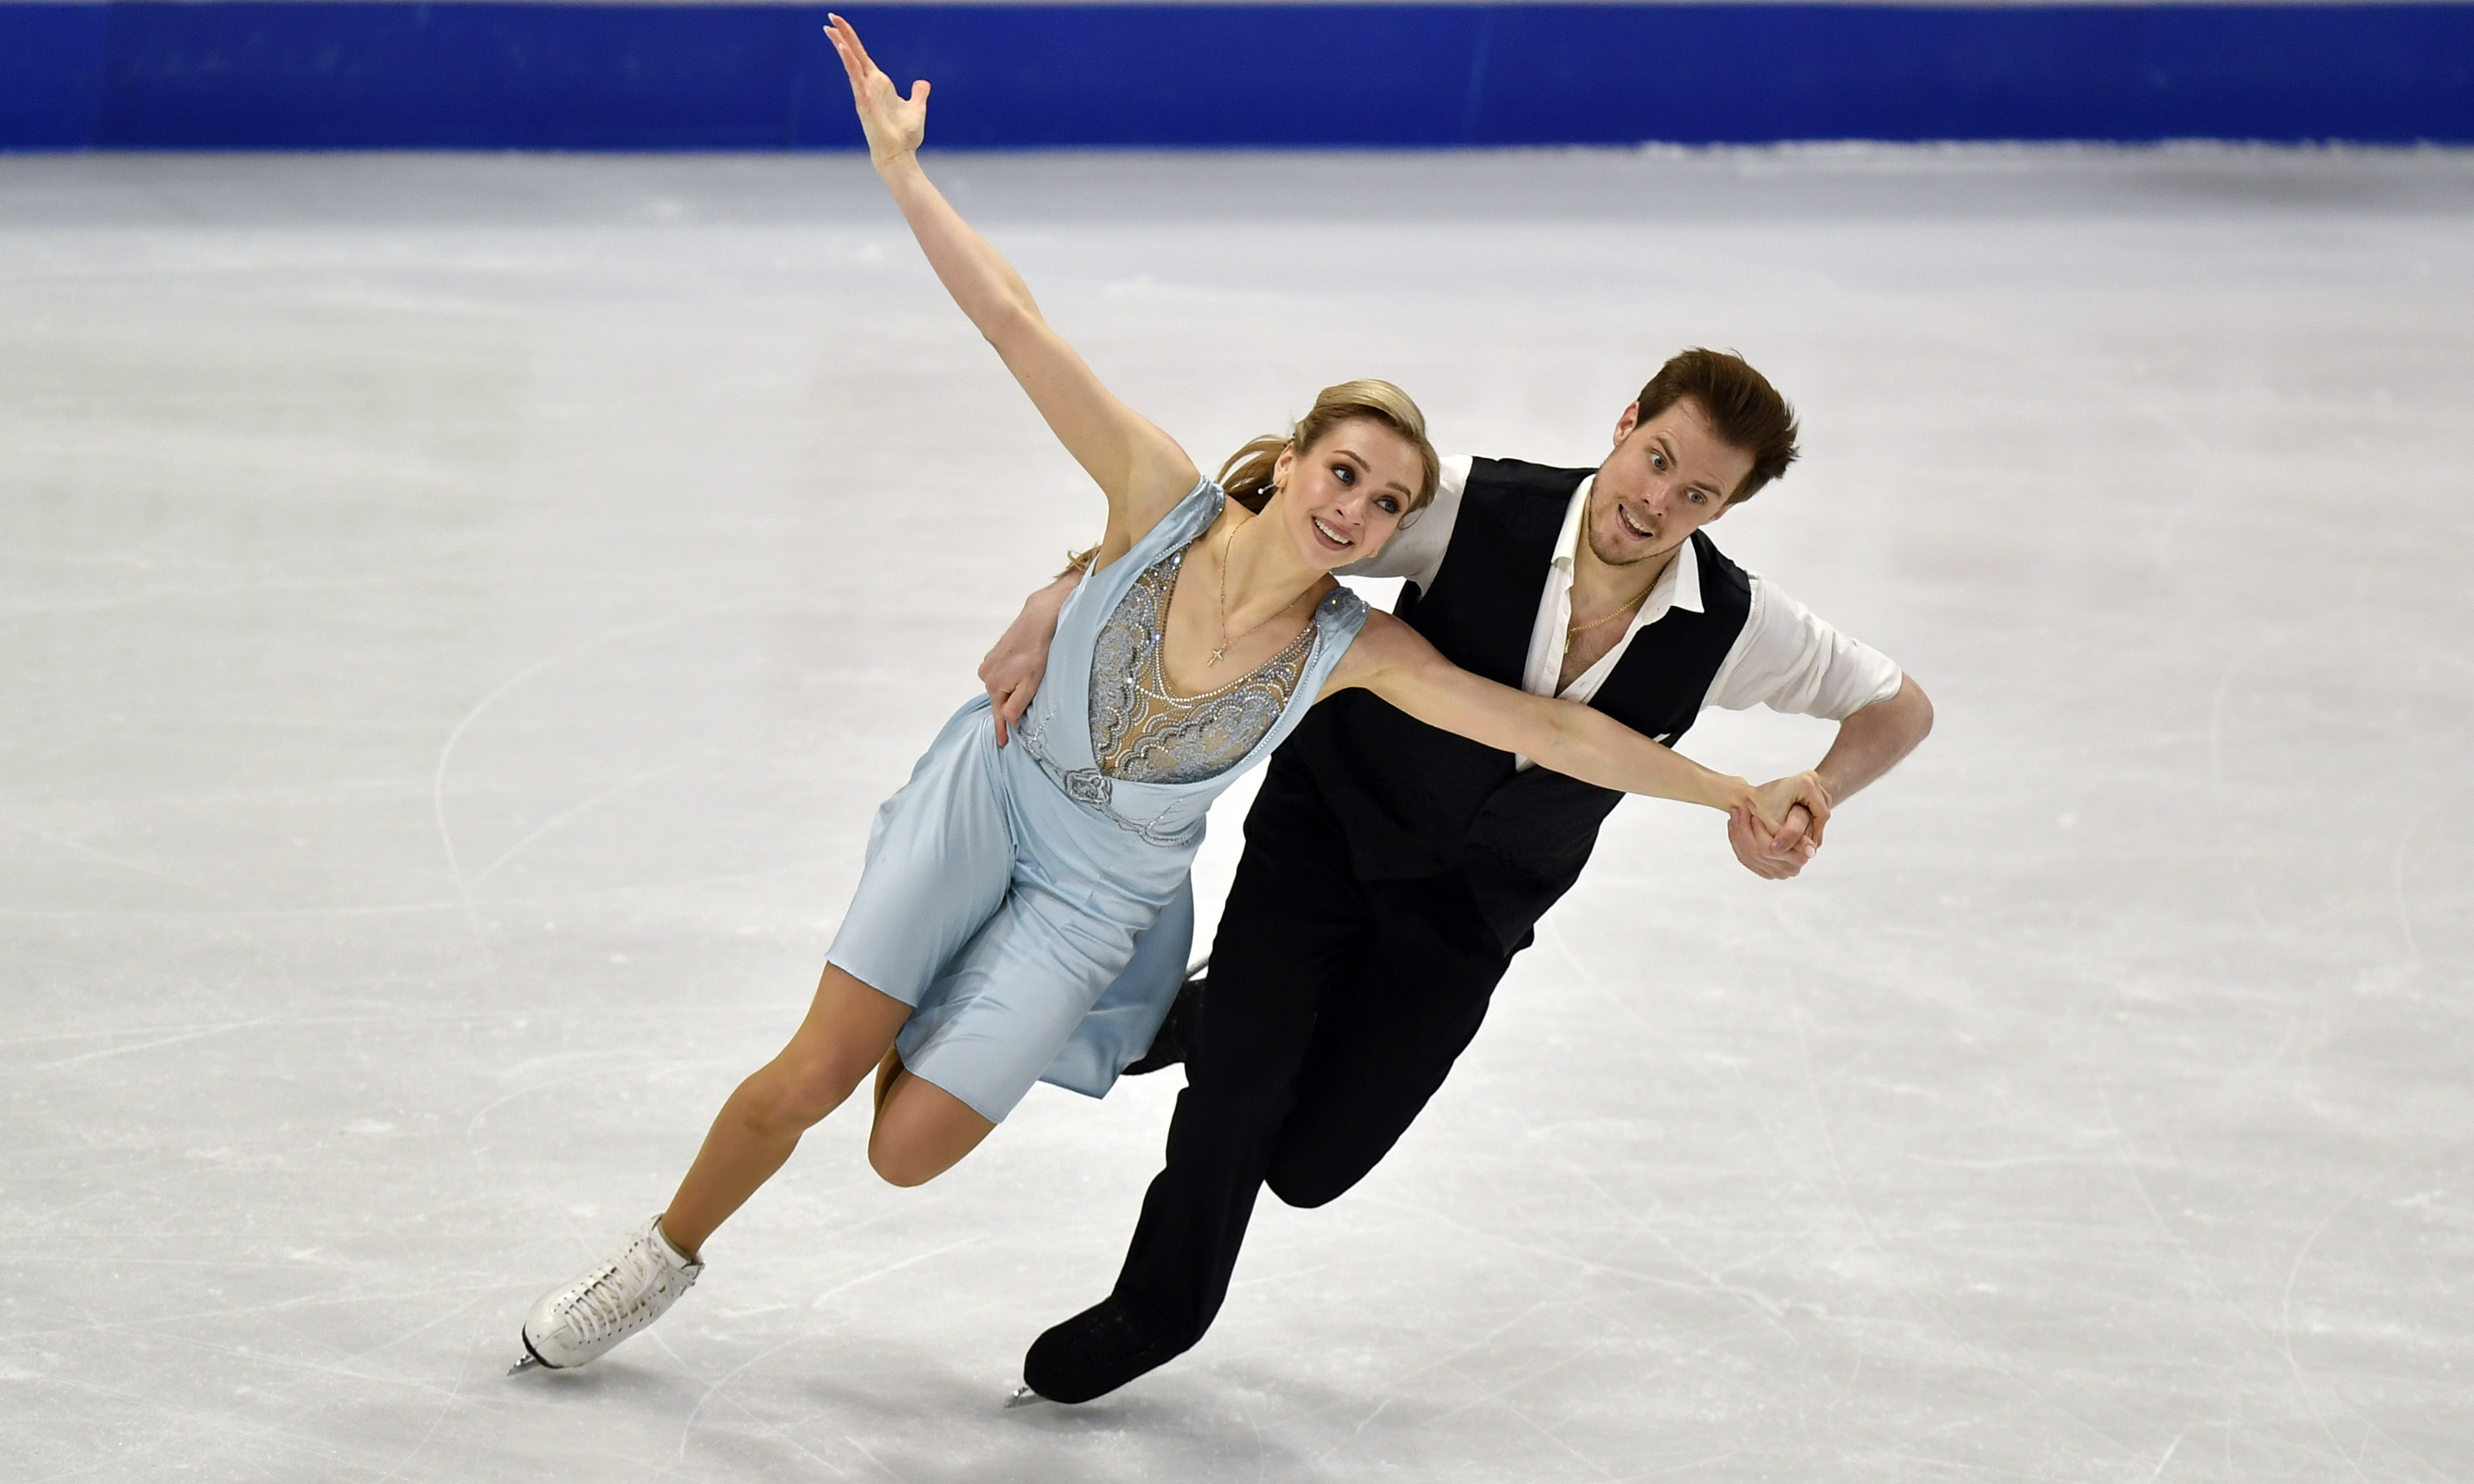 ISU World Figure Skating Championships 2021: Ice Dance Short, All Friday Results | Bleacher